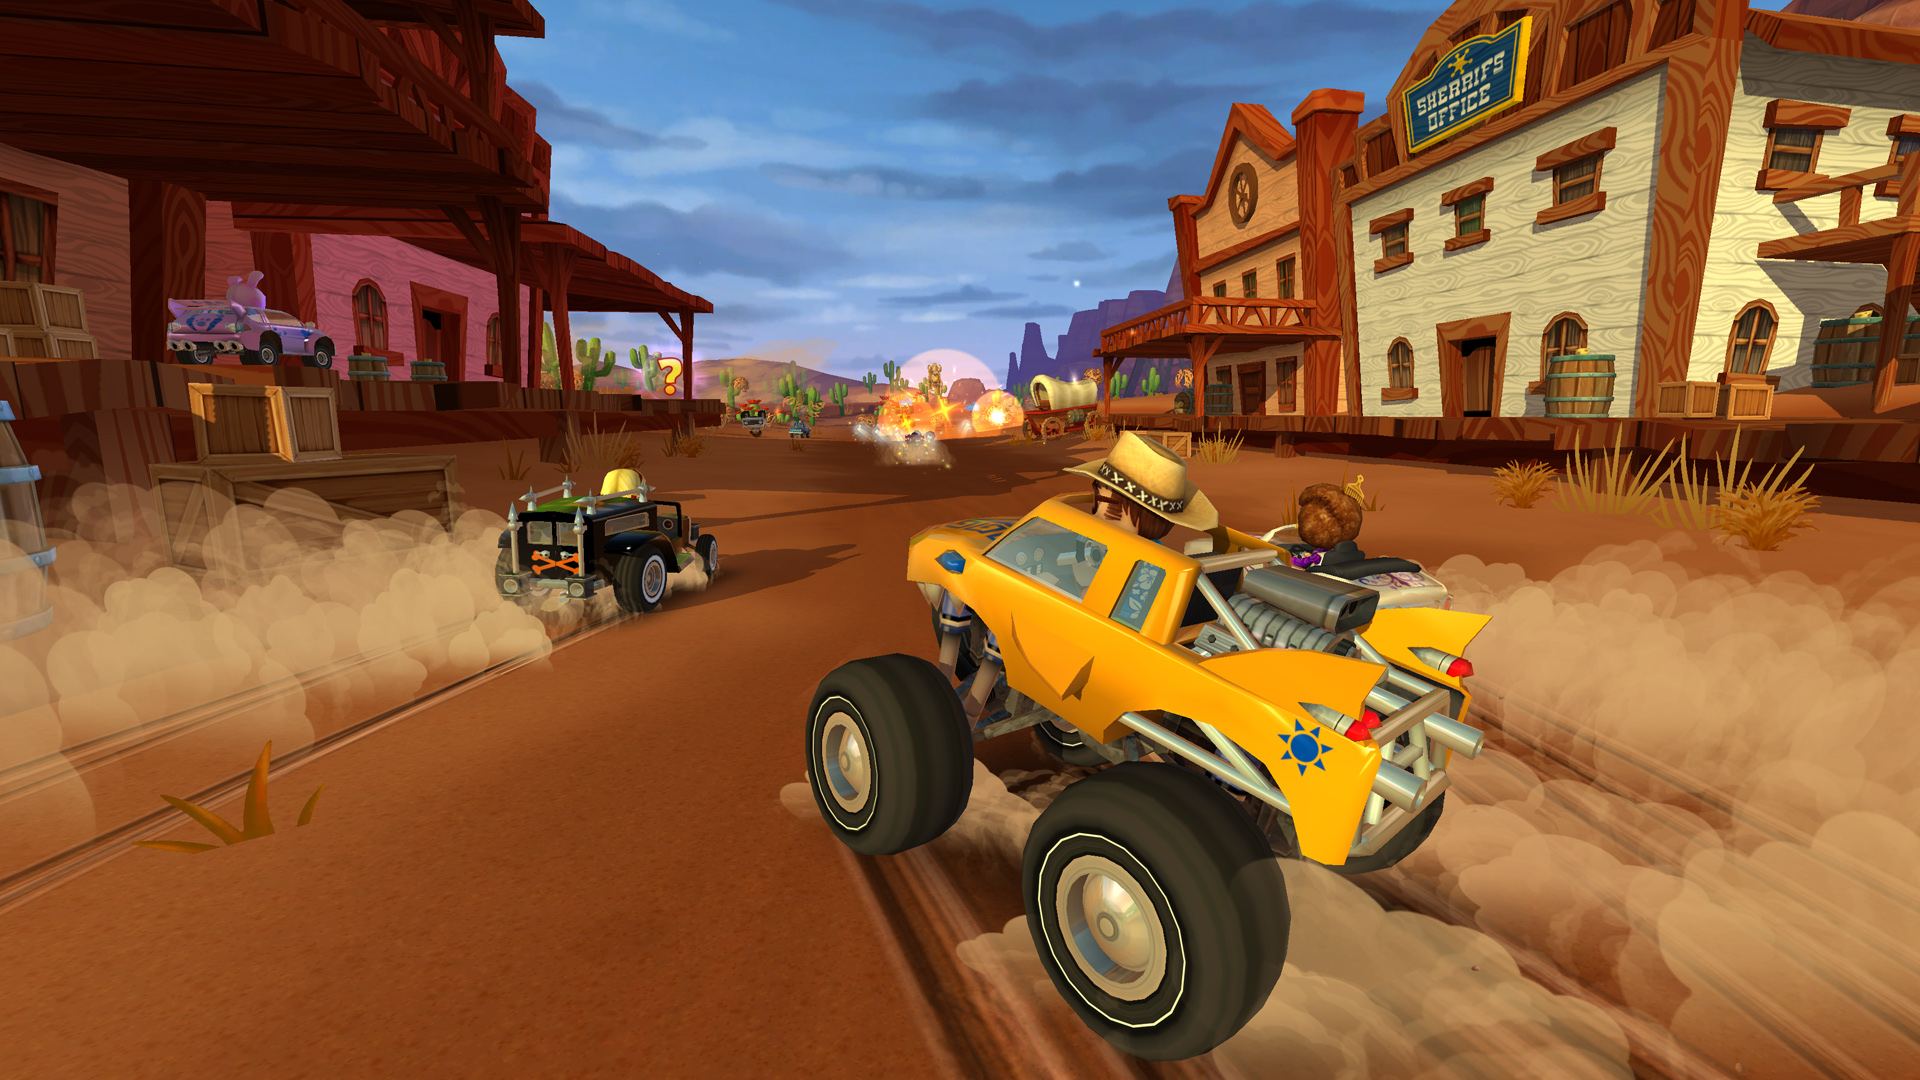 Play Free Renegade Racing free online racing game : http